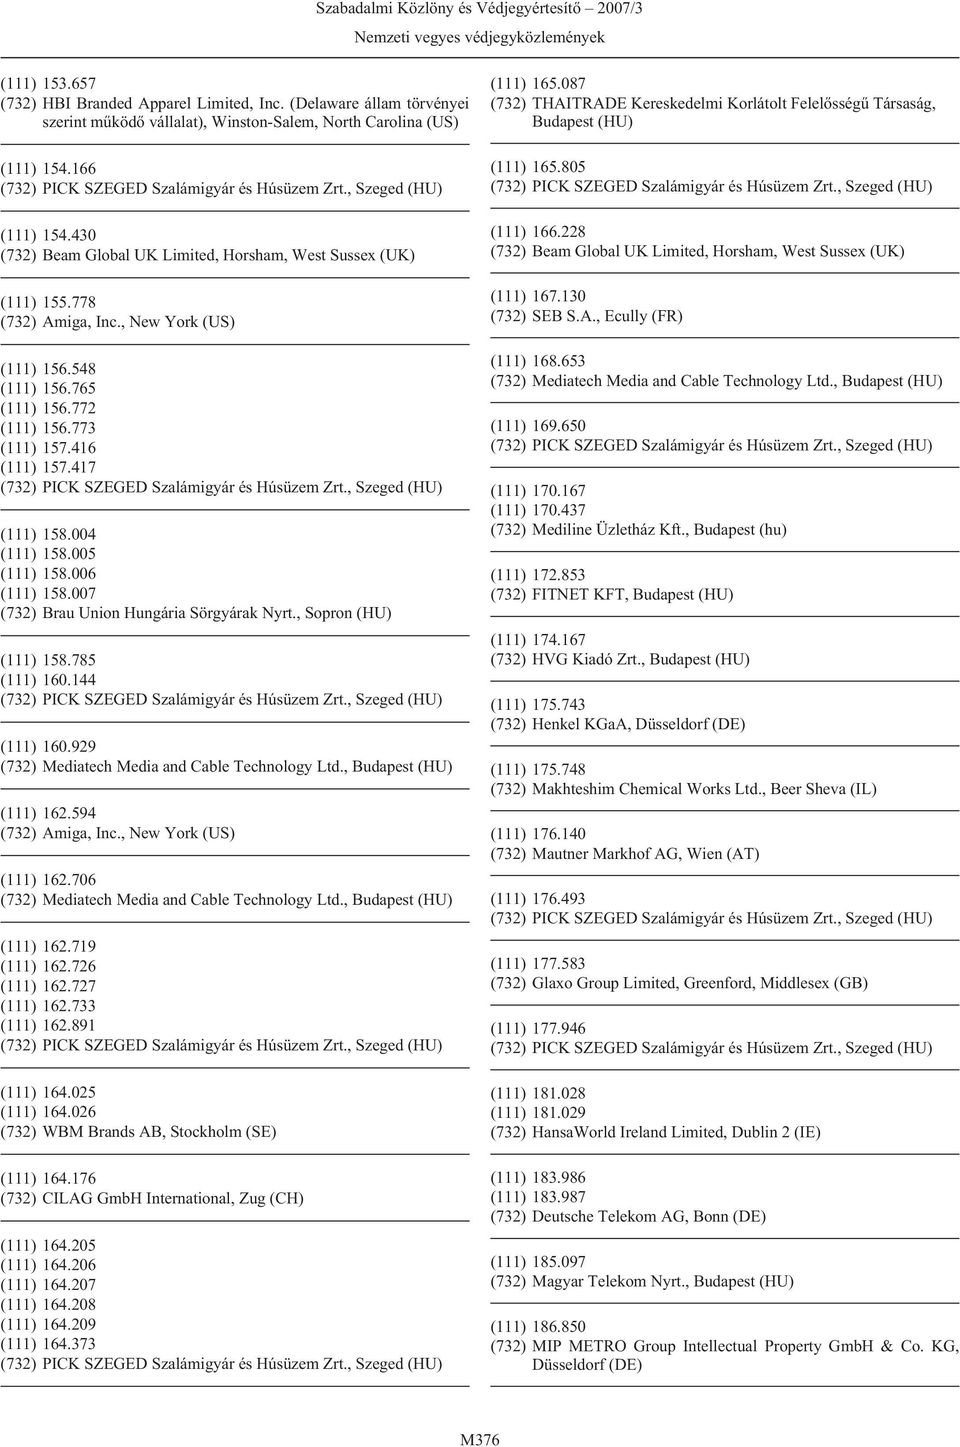 594 (732) Amiga, Inc., New York (US) (111) 162.706 (732) Mediatech Media and Cable Technology Ltd., (HU) (111) 162.719 (111) 162.726 (111) 162.727 (111) 162.733 (111) 162.891 (111) 164.025 (111) 164.